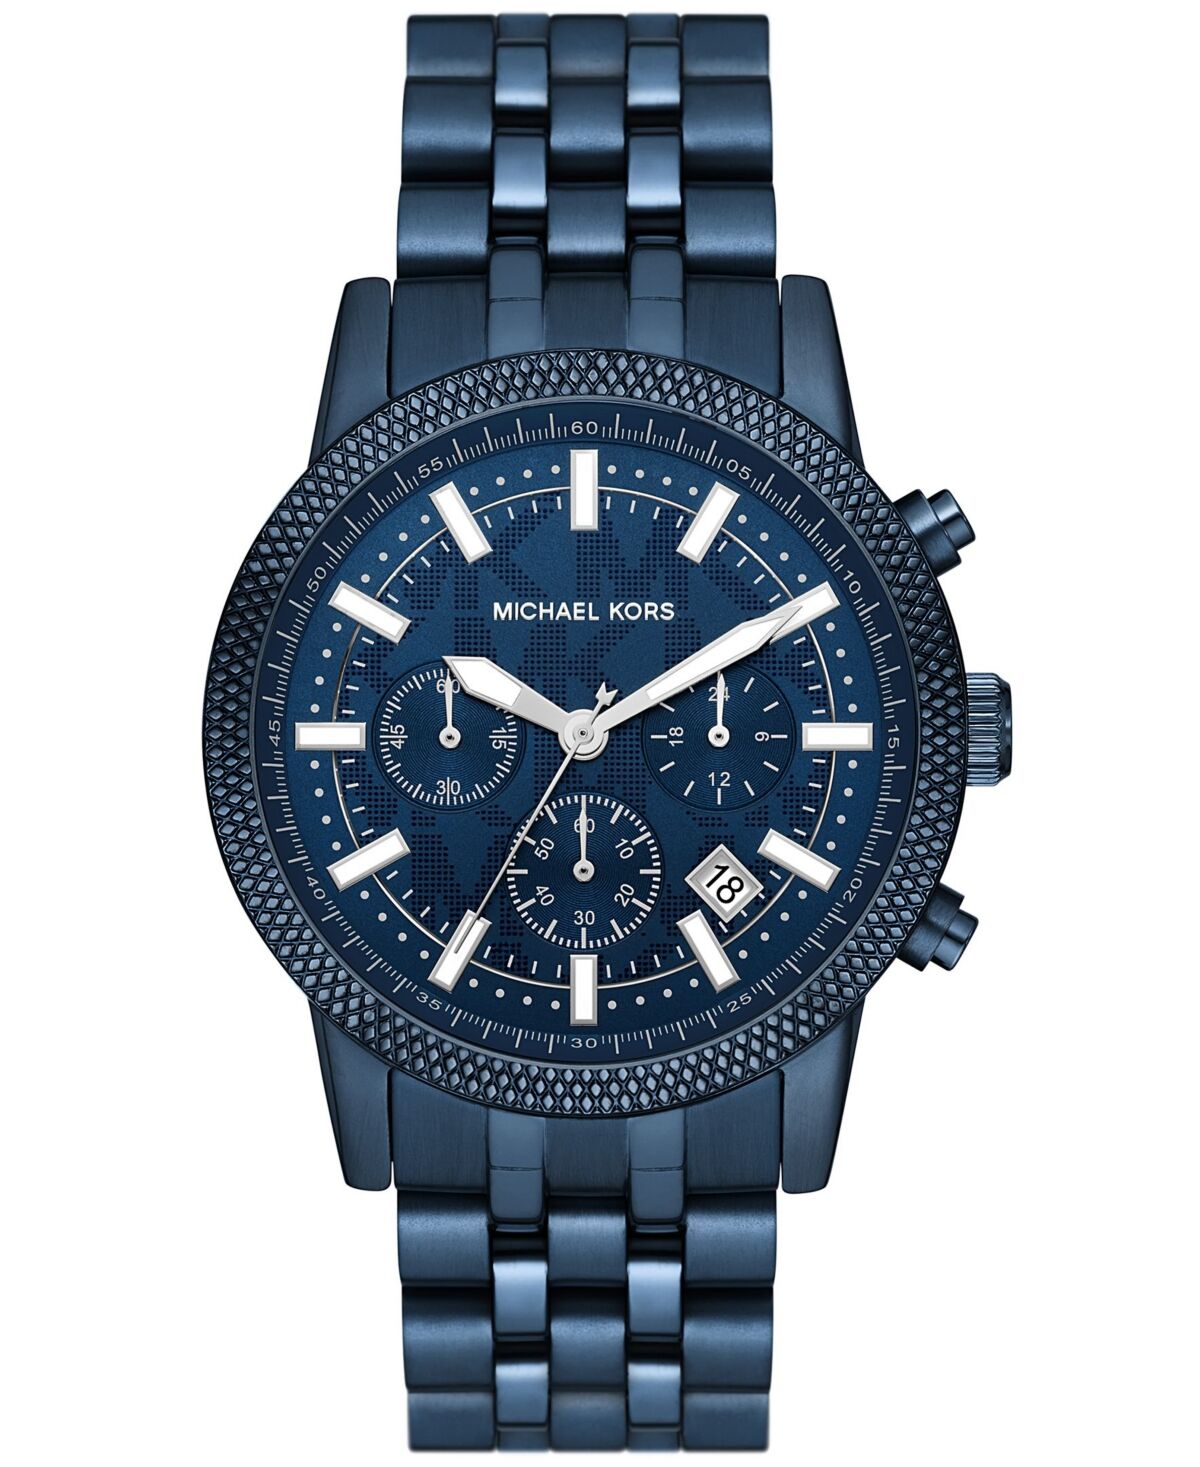 Michael Kors Men's Hutton Chronograph Navy Stainless Steel Bracelet Watch, 43mm - Navy